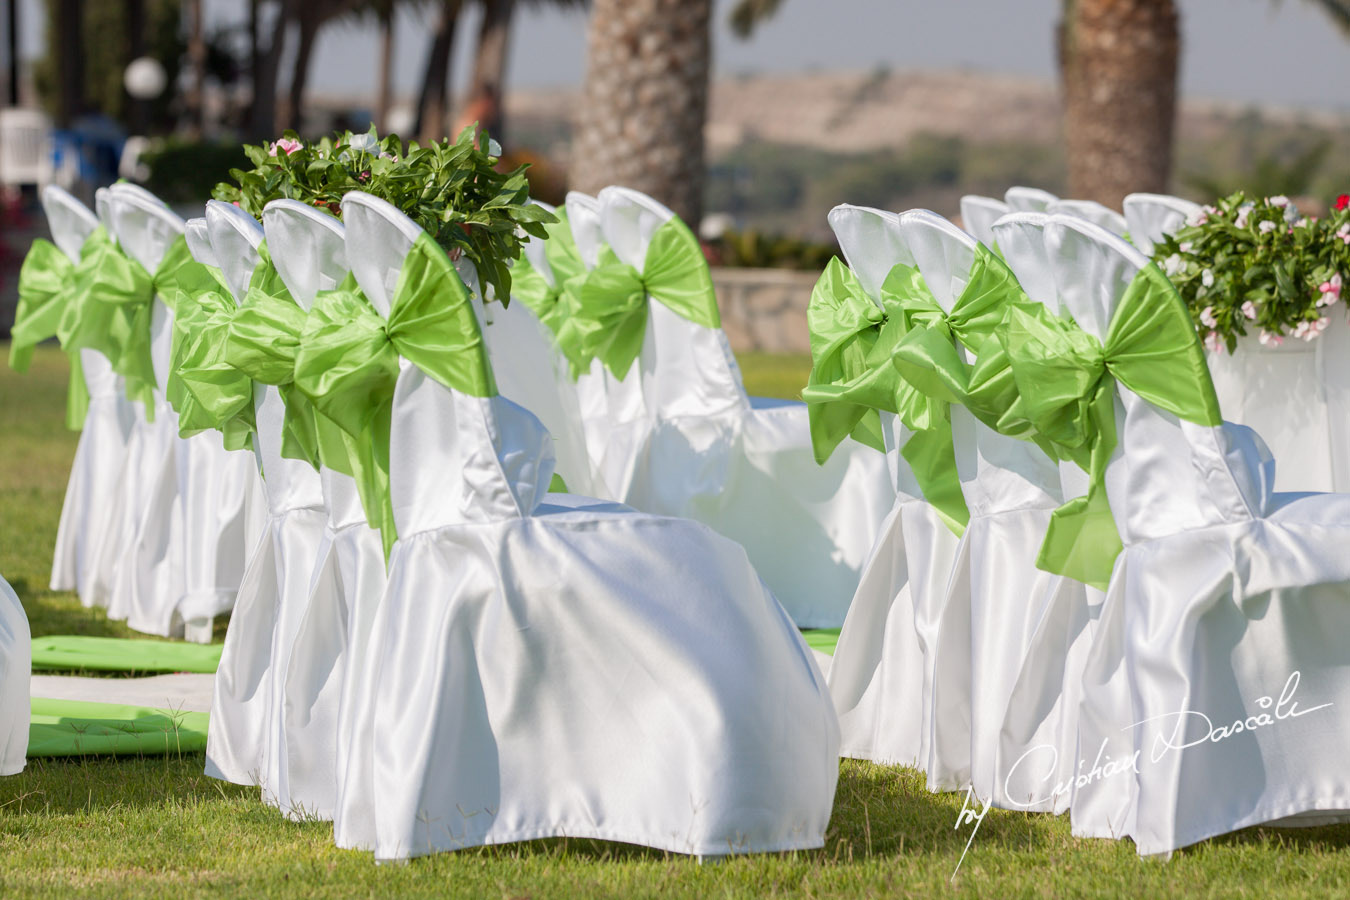 Cyprus Wedding Photography - Alex & Inga. Cyprus Photographer: Cristian Dascalu